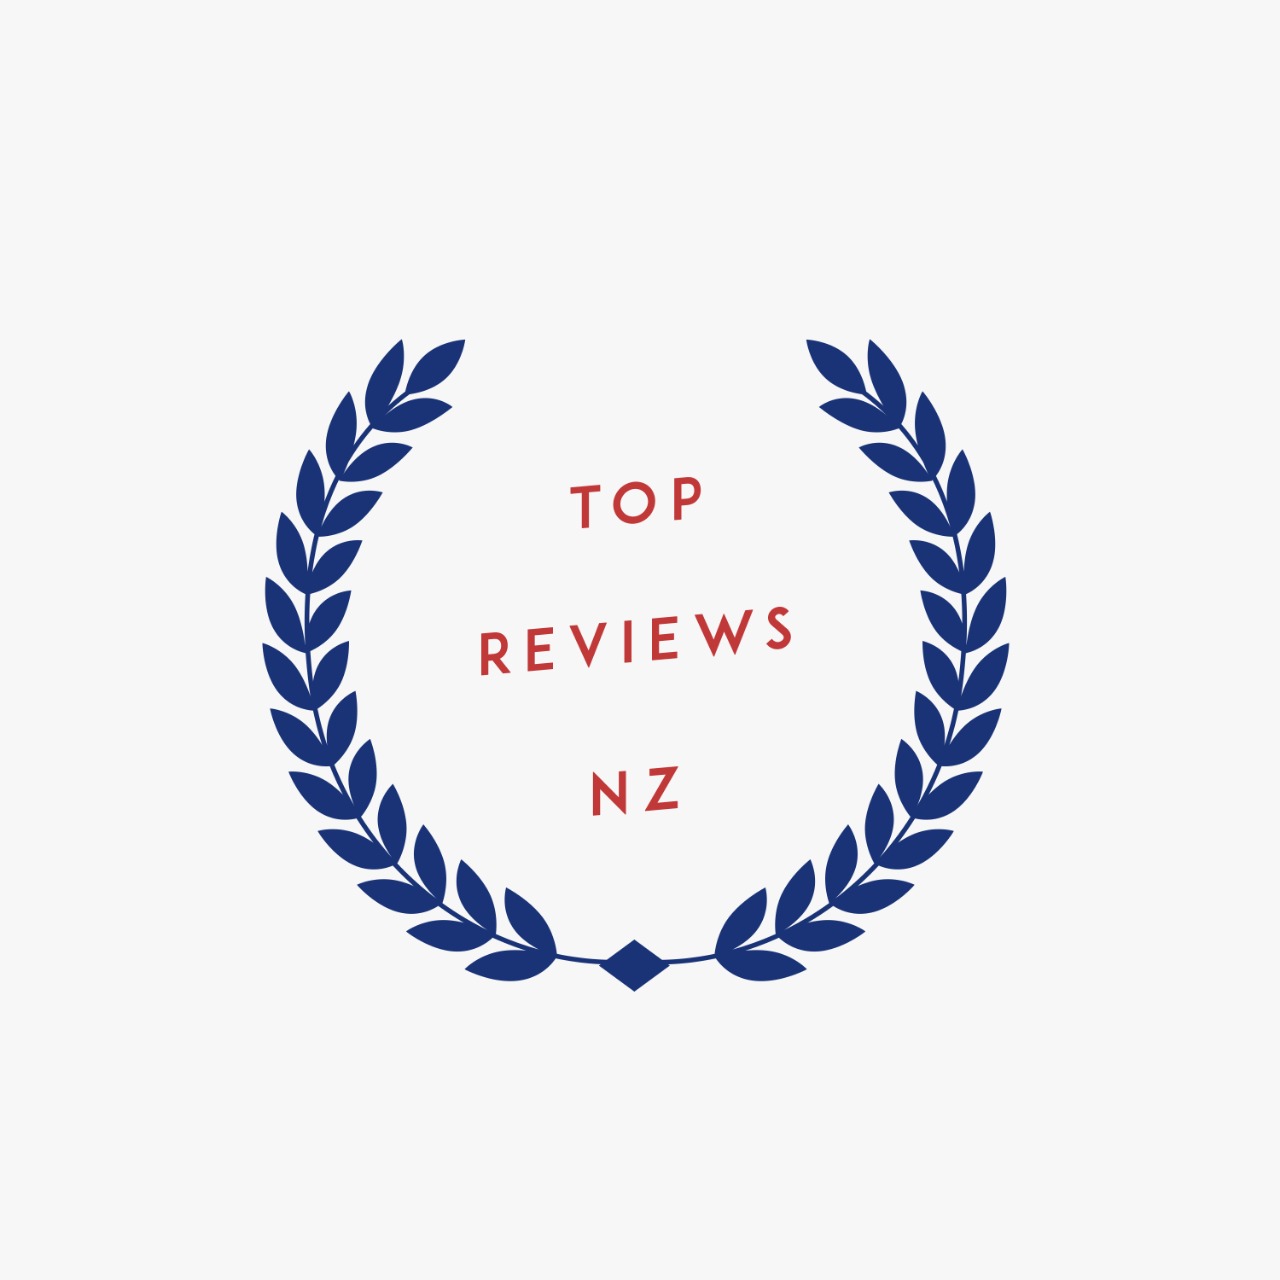 Top reviews logo 2